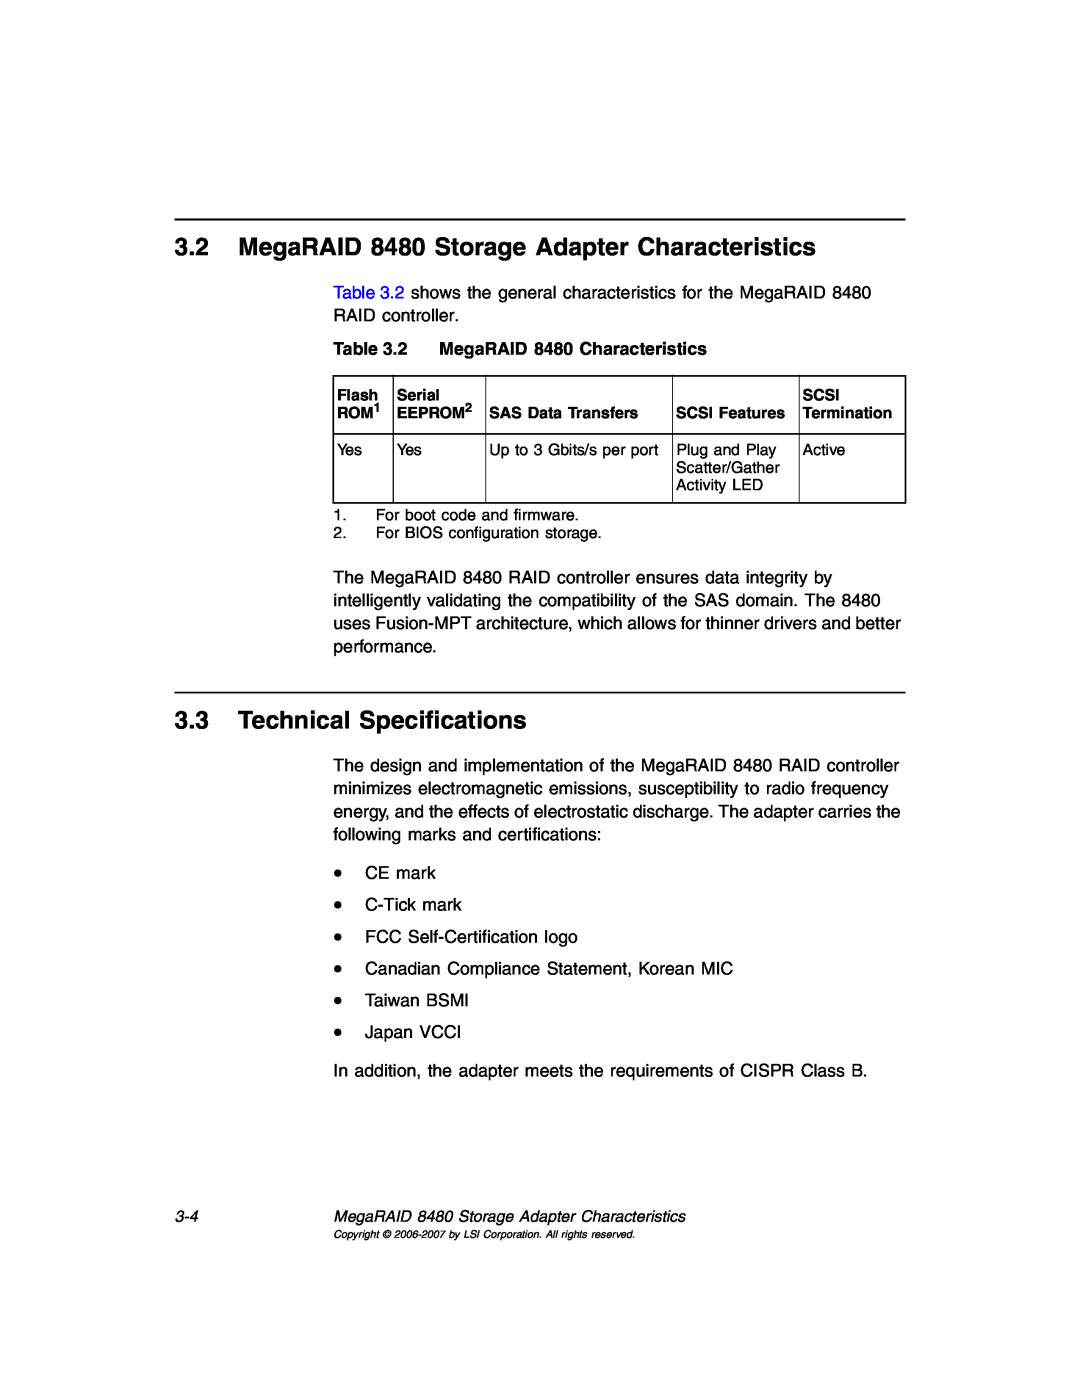 IBM manual MegaRAID 8480 Storage Adapter Characteristics, Technical Specifications, 2 MegaRAID 8480 Characteristics 